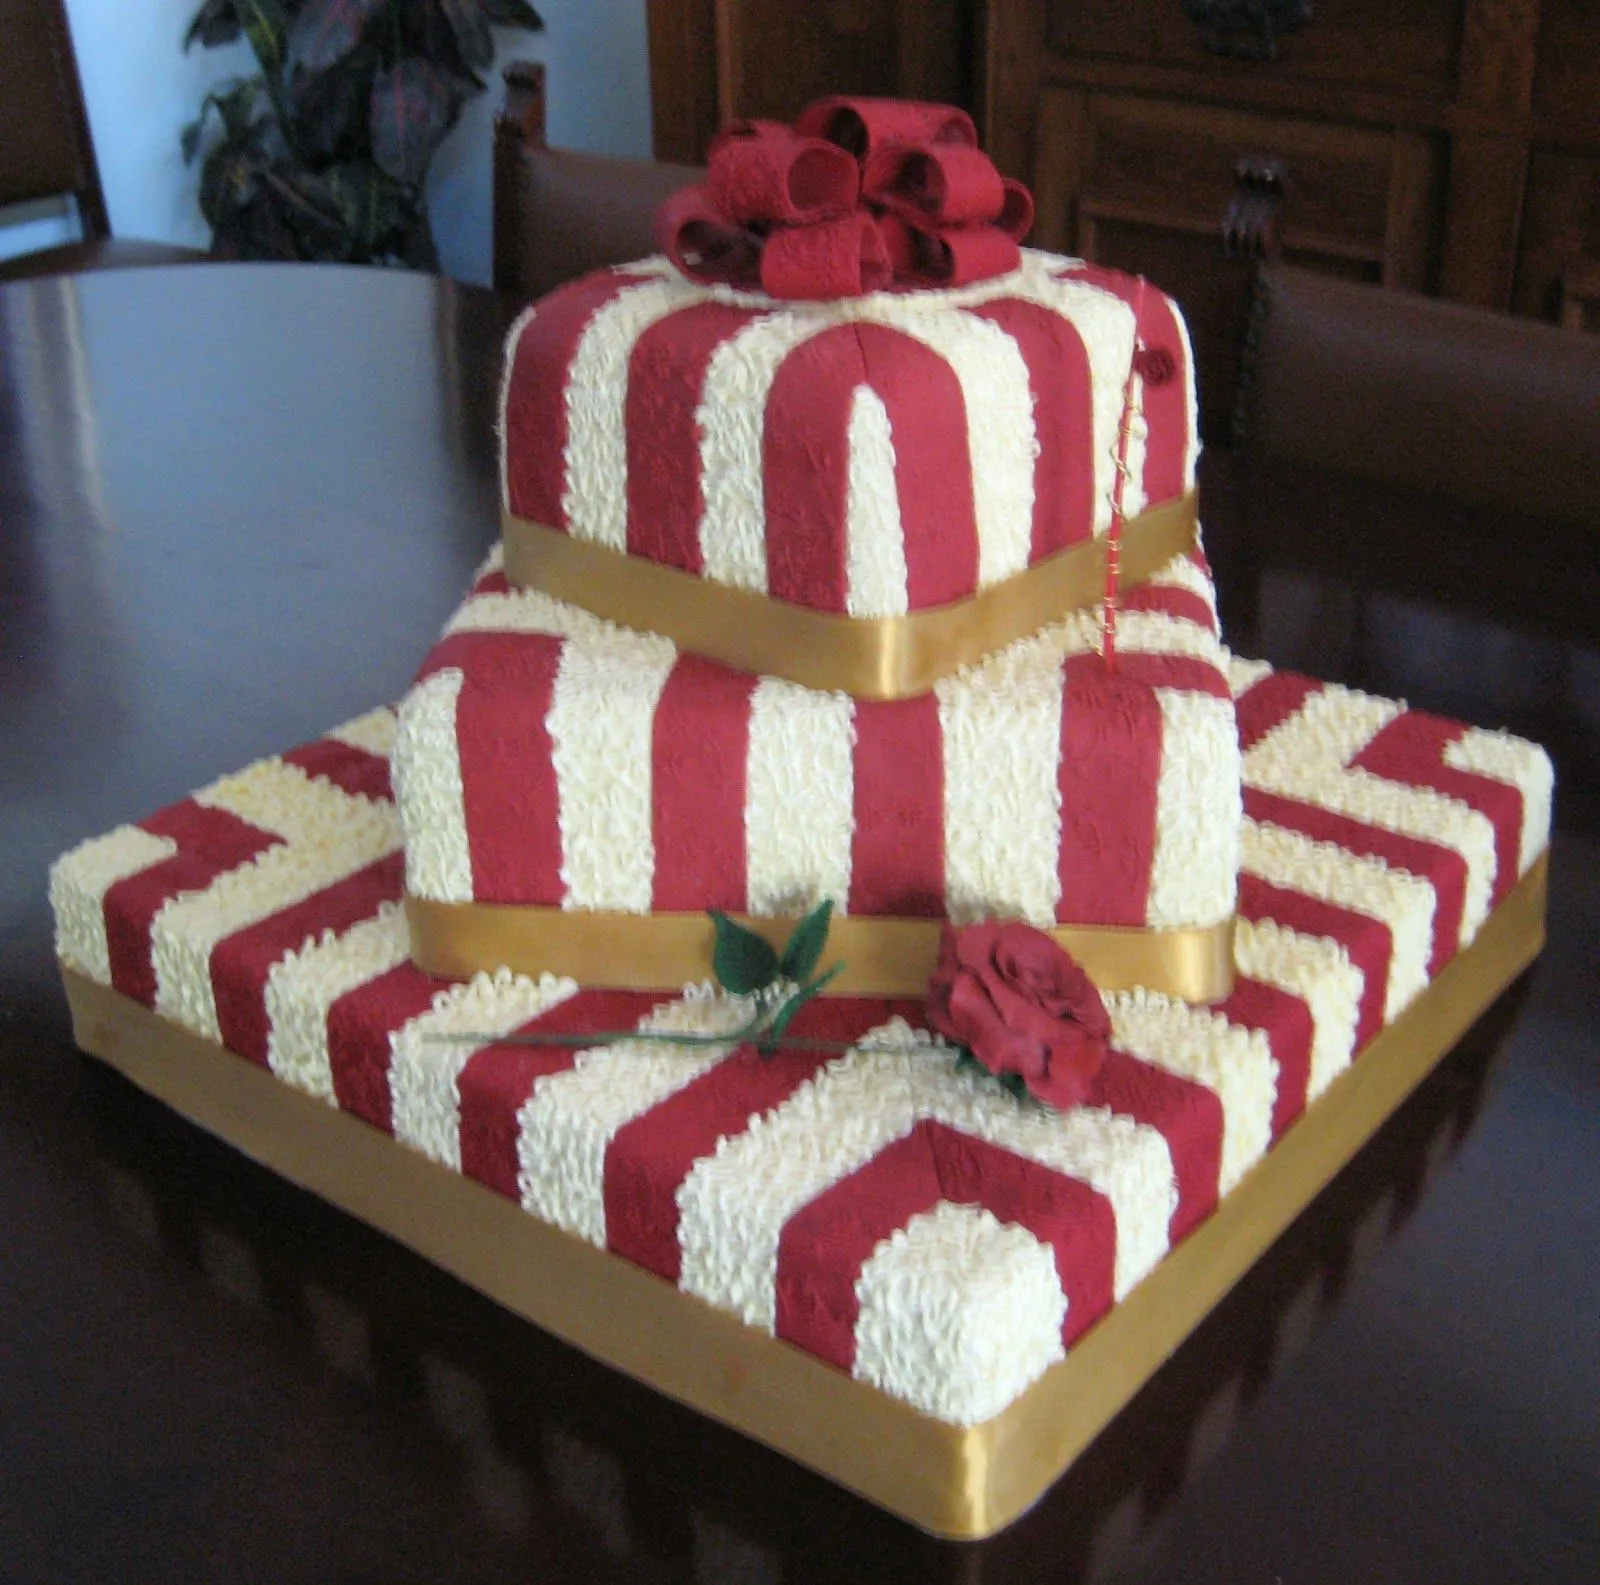 Torta de cumpleaños para mujer de 40 - Imagui